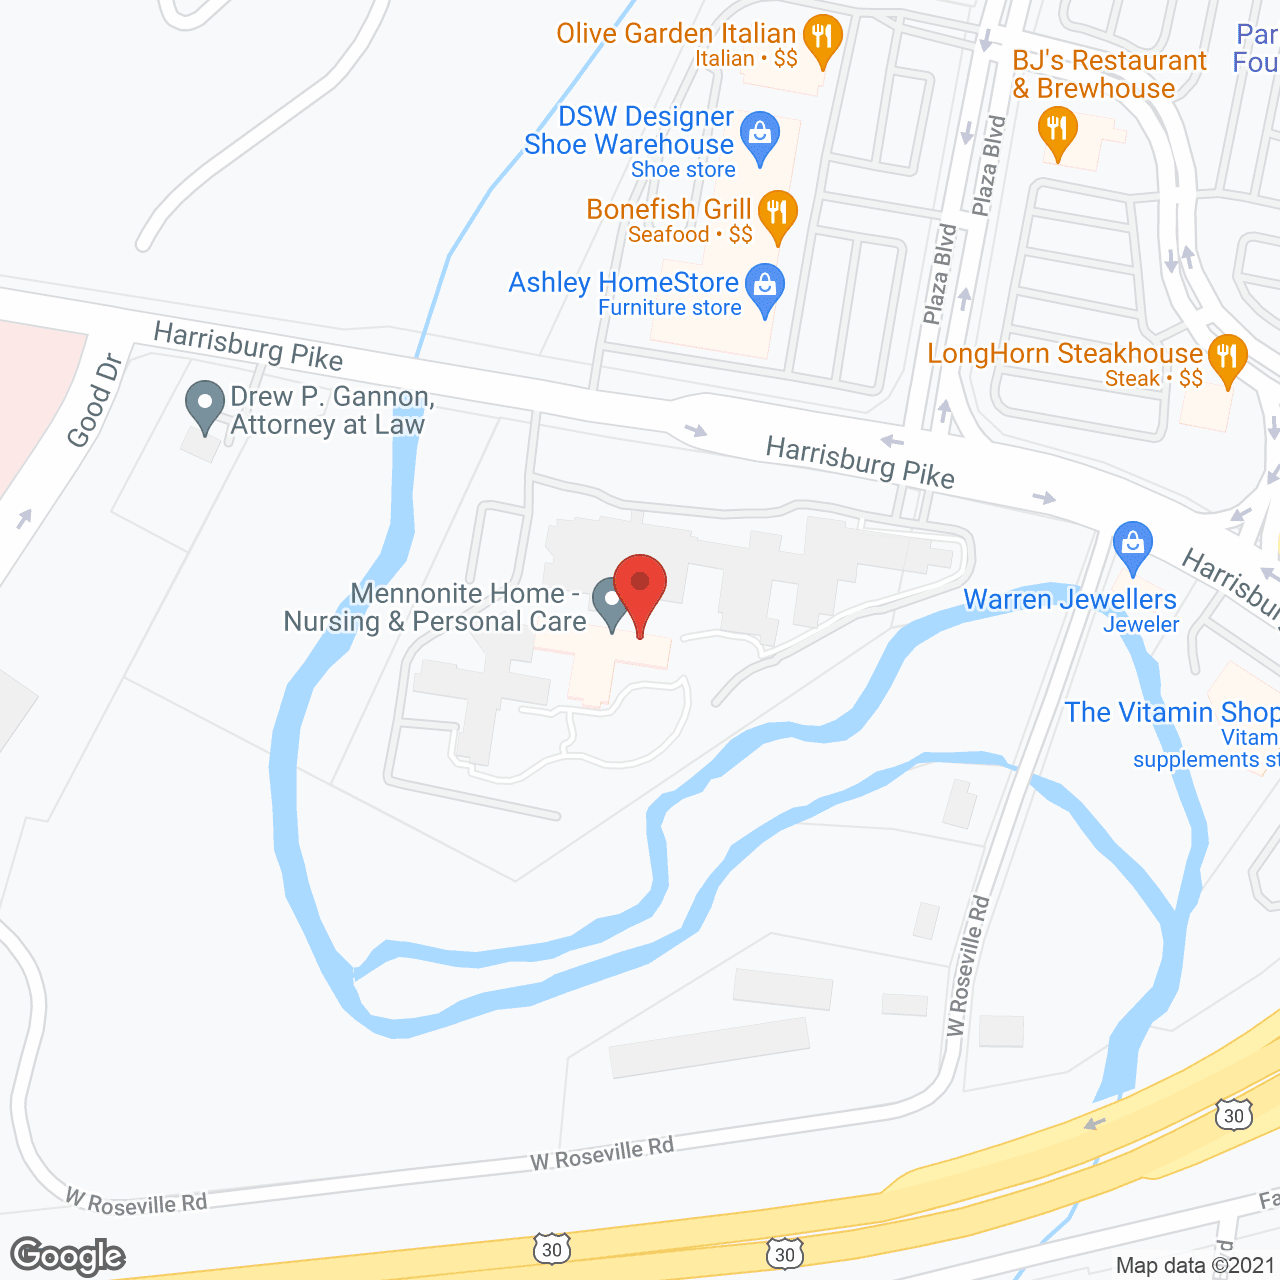 The Mennonite Home in google map